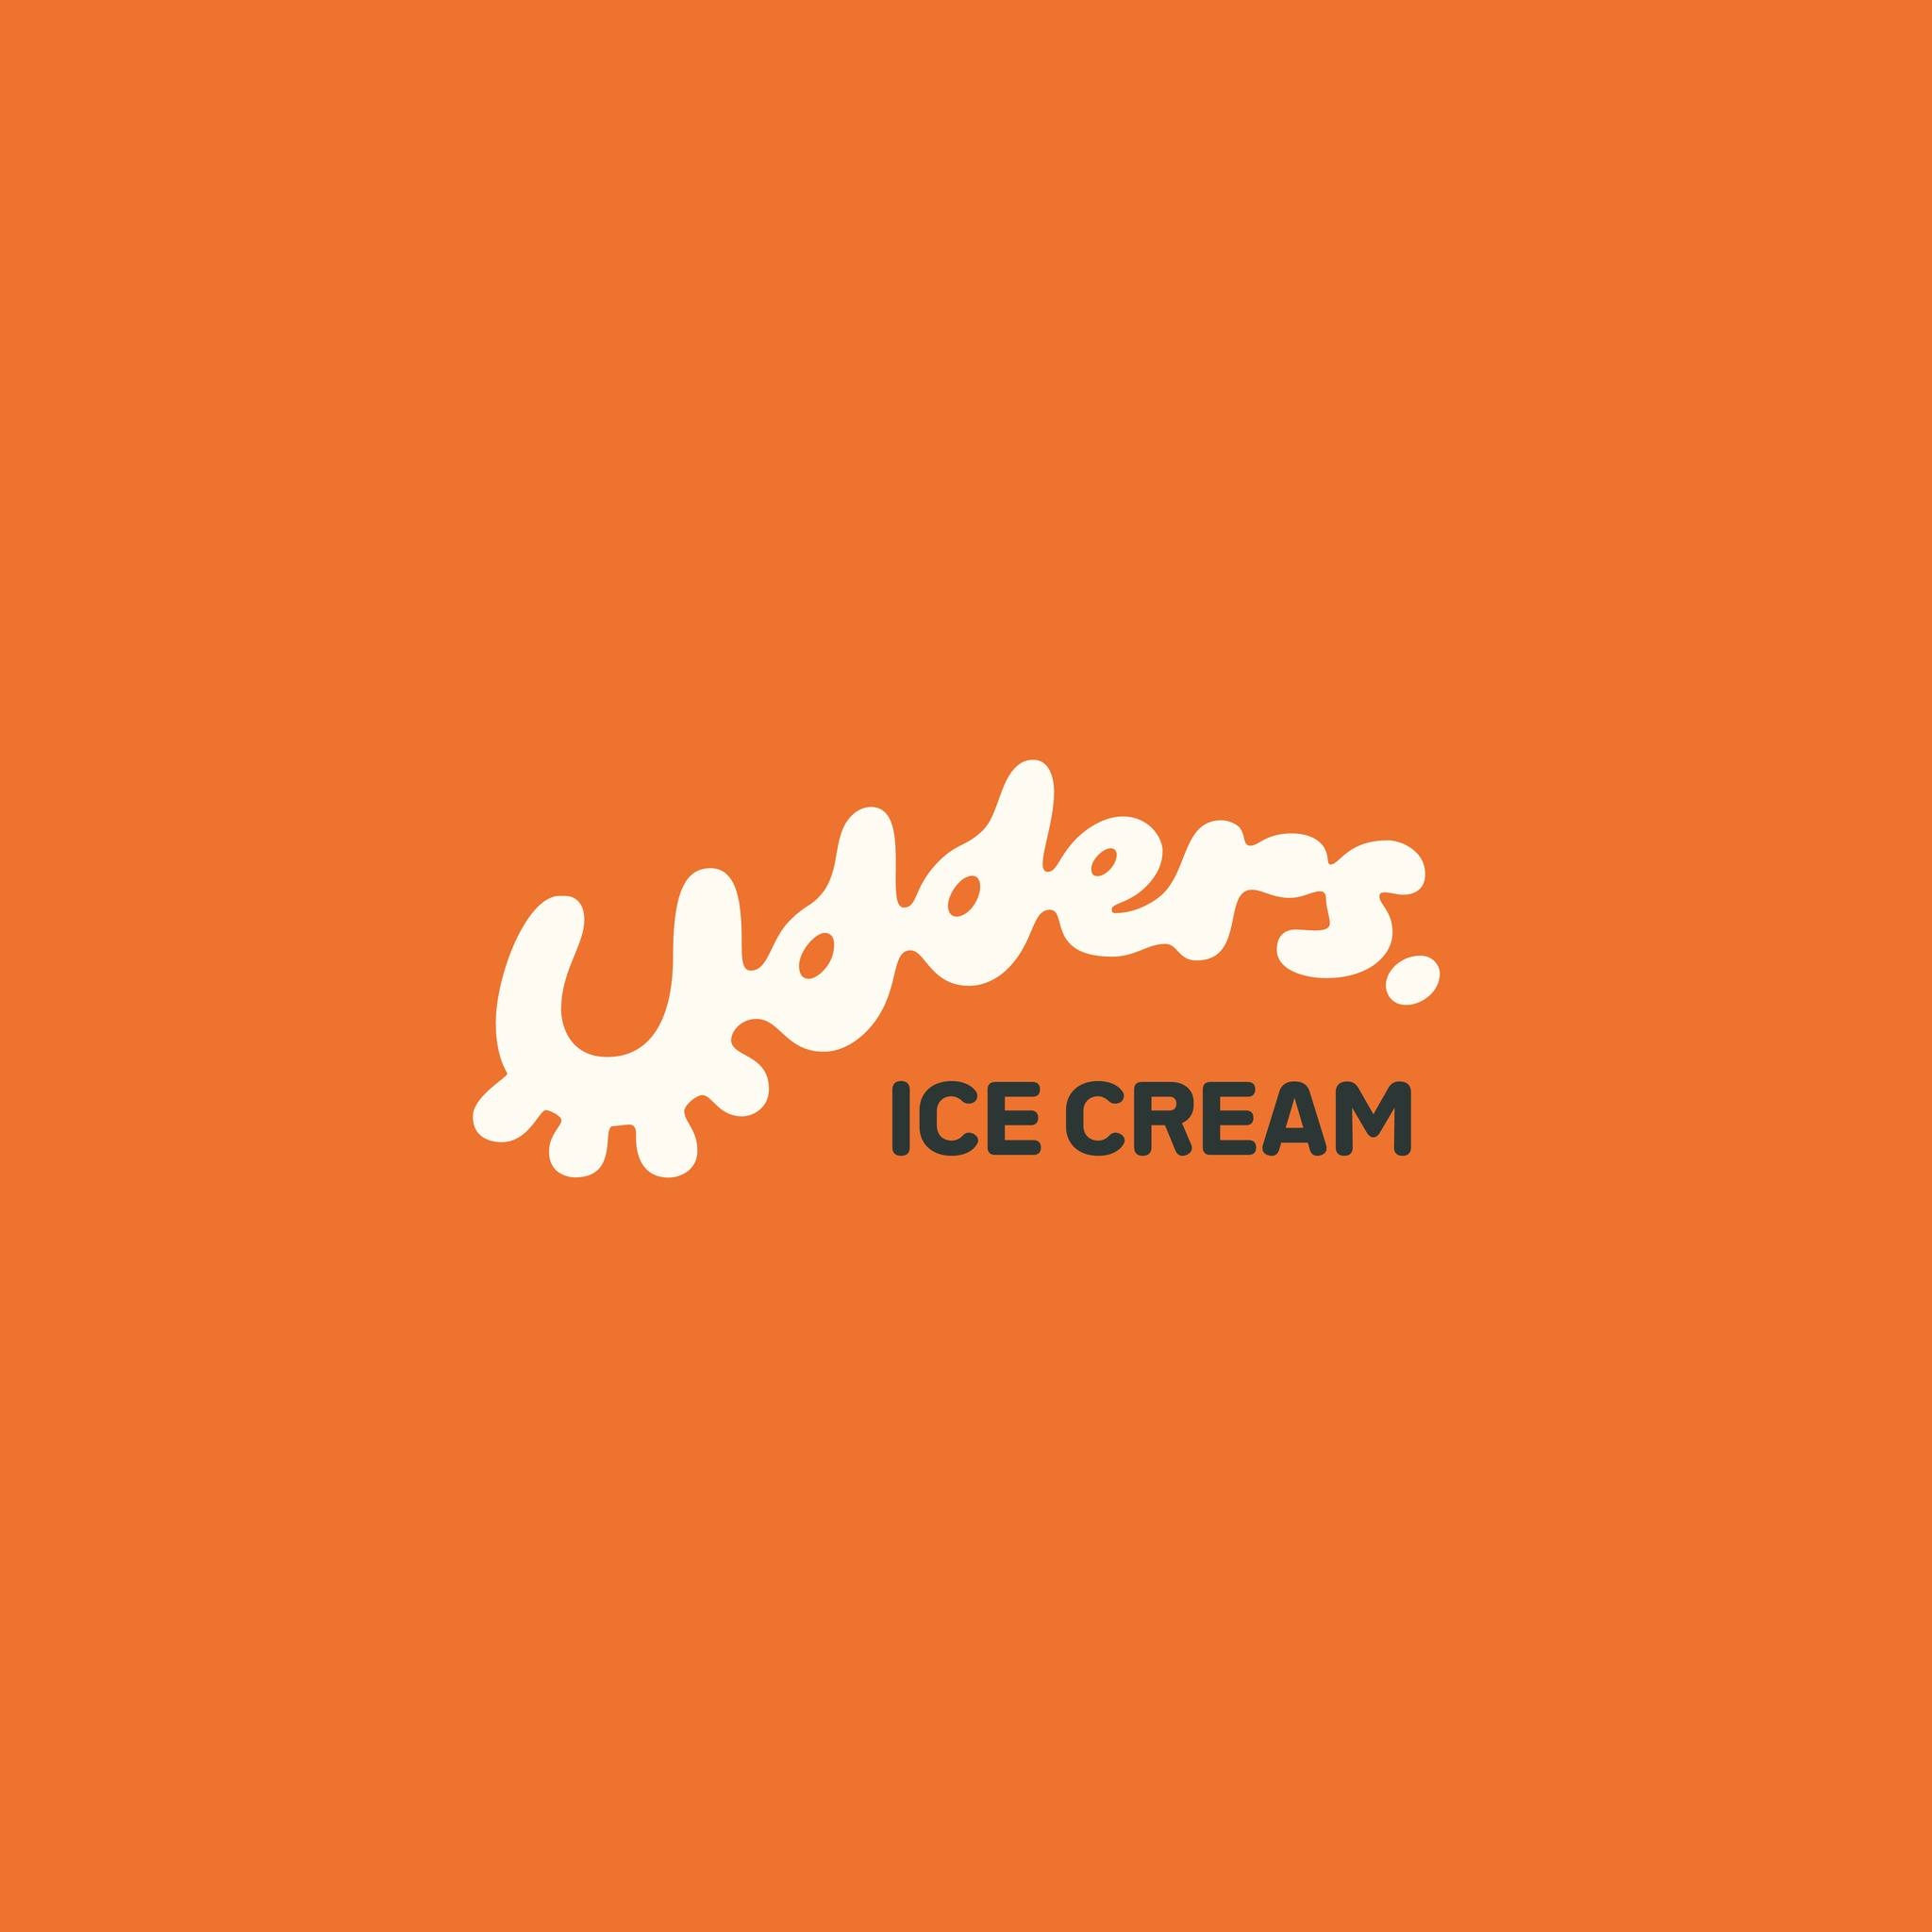 Udders Ice Cream Malaysia Inspection 